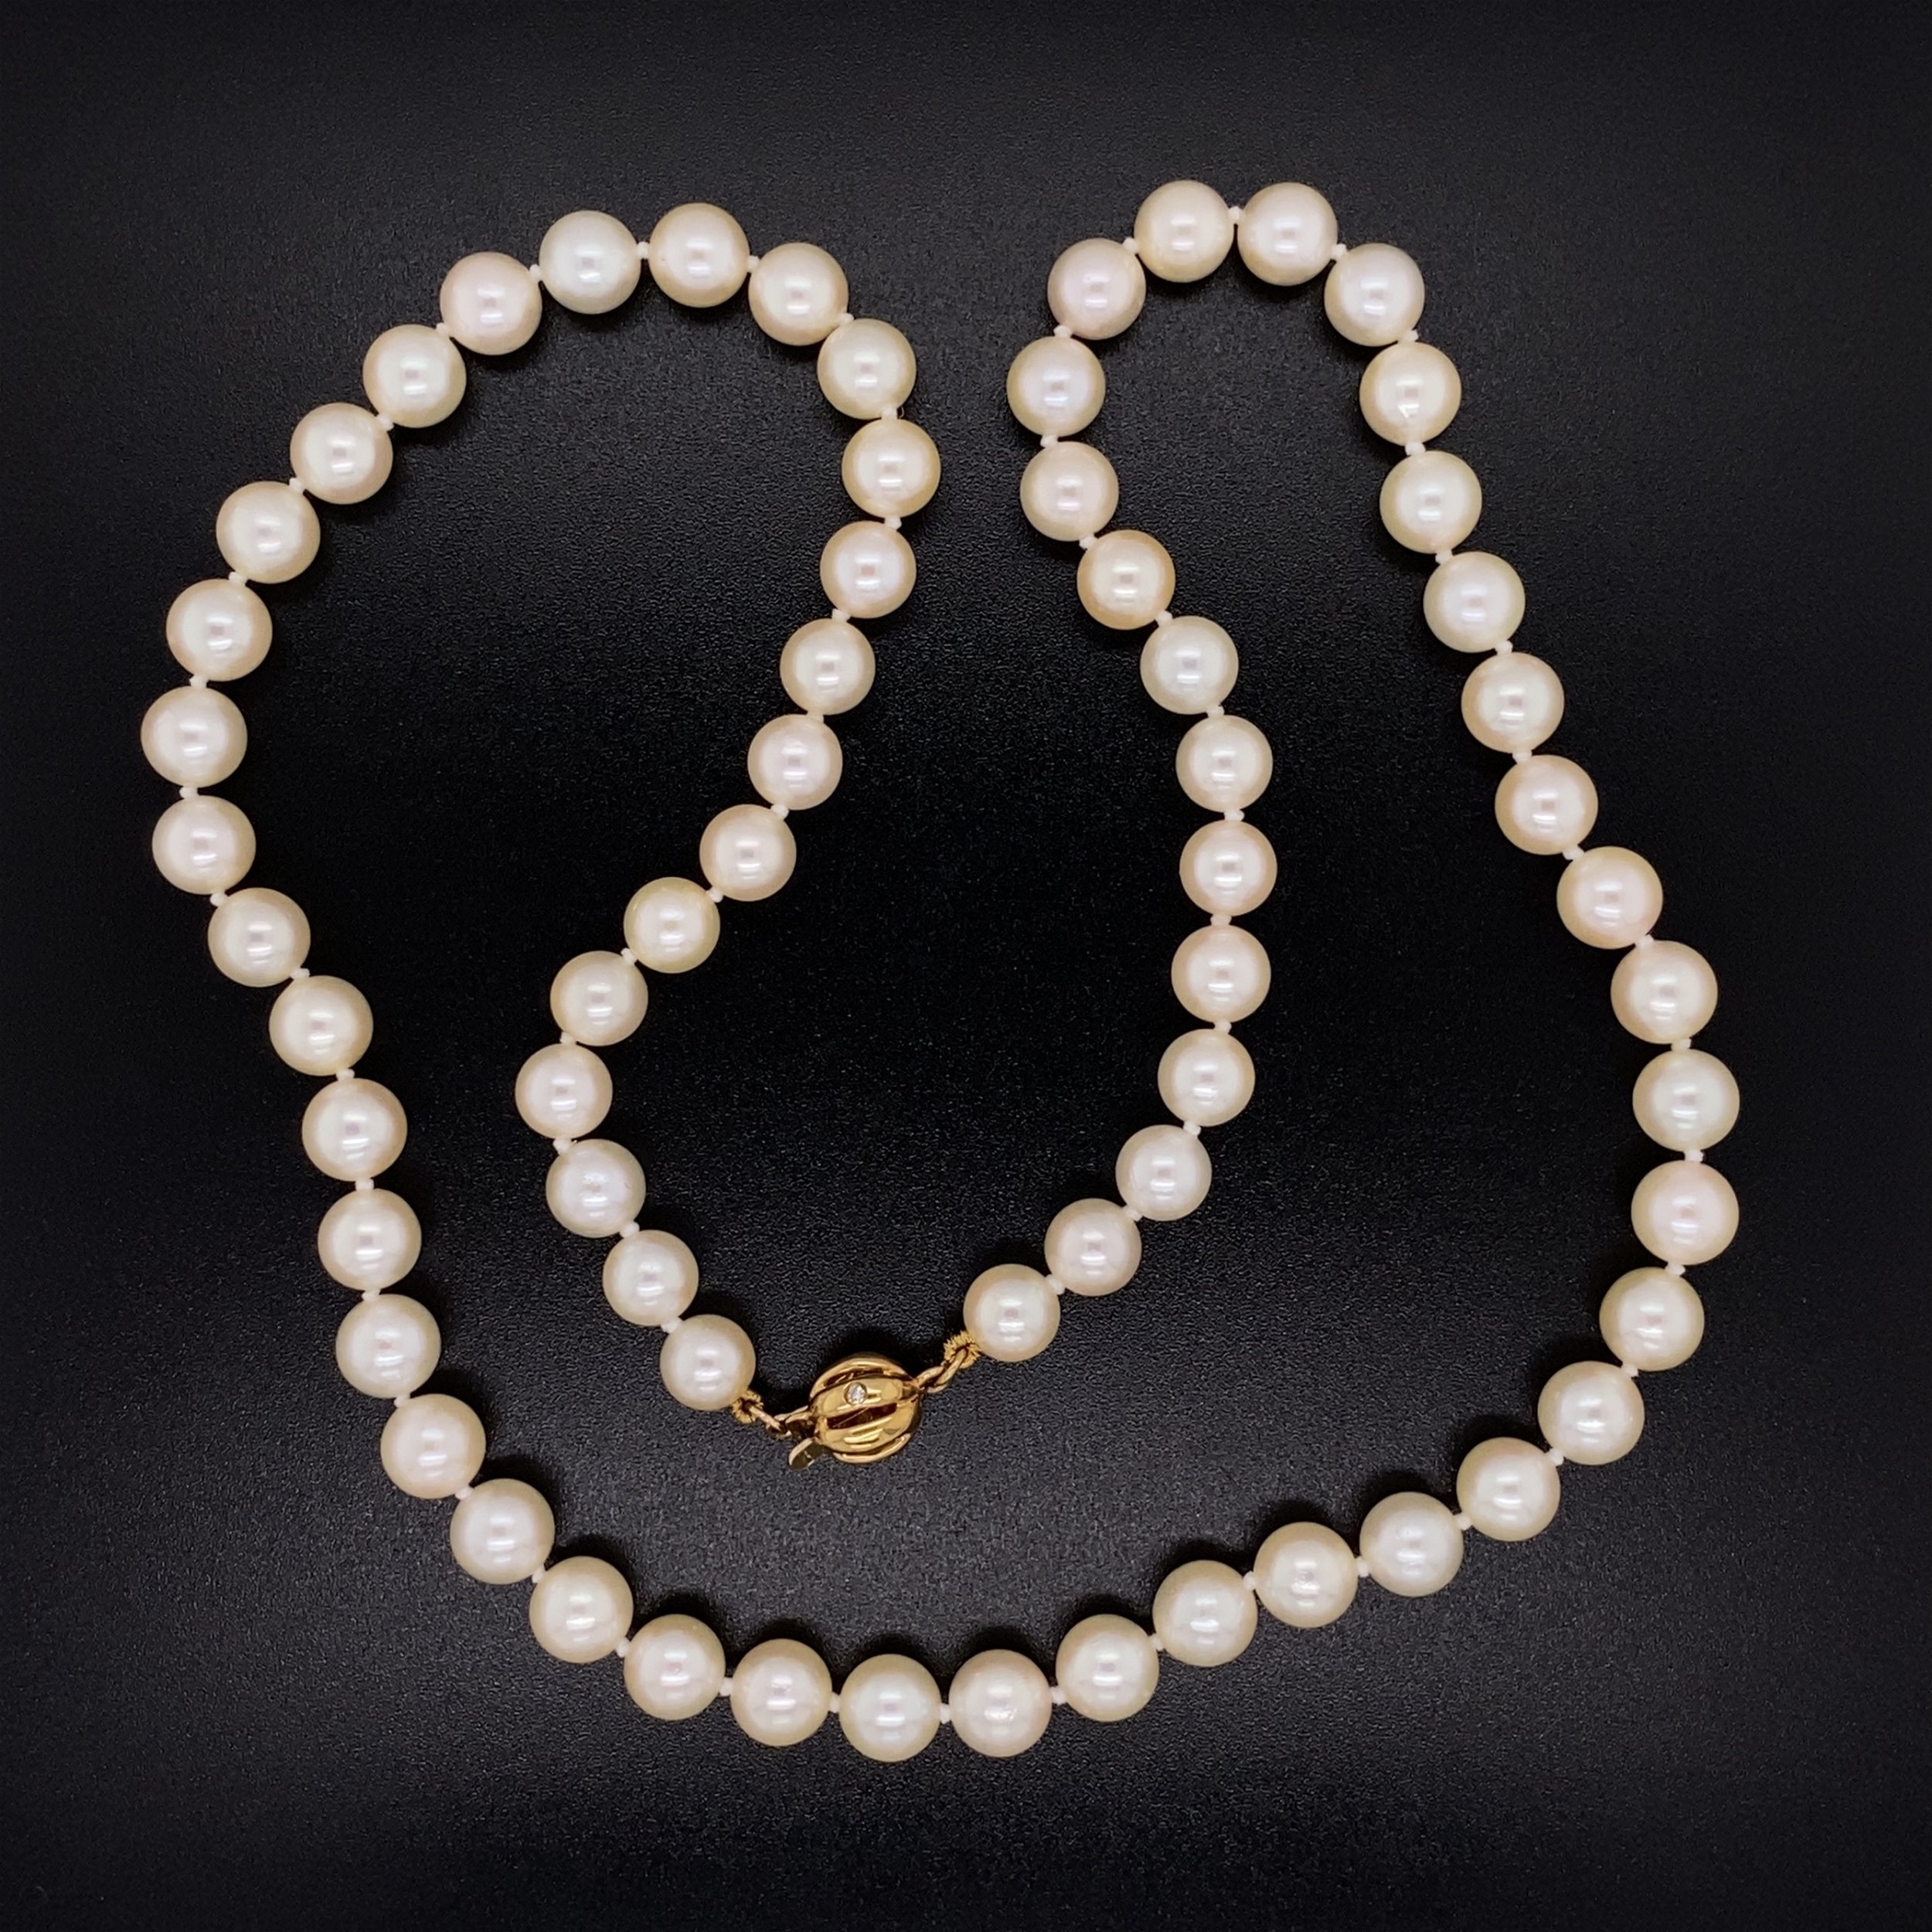 14K YG 6.5mm Cultured Pearl Necklace & .03tcw Diamond 24.2g, 18"